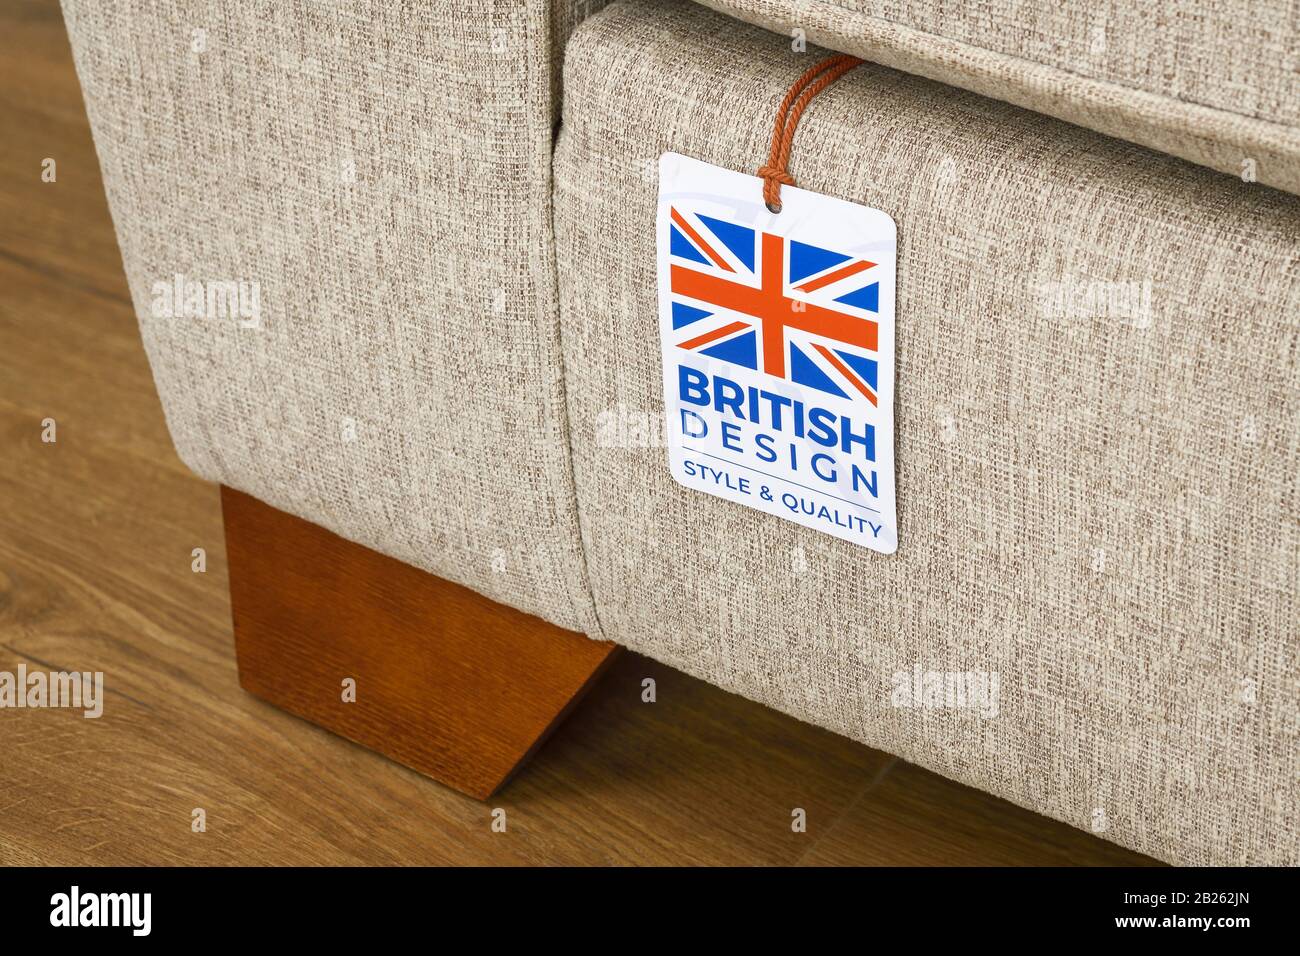 A British Design label on a sofa Stock Photo